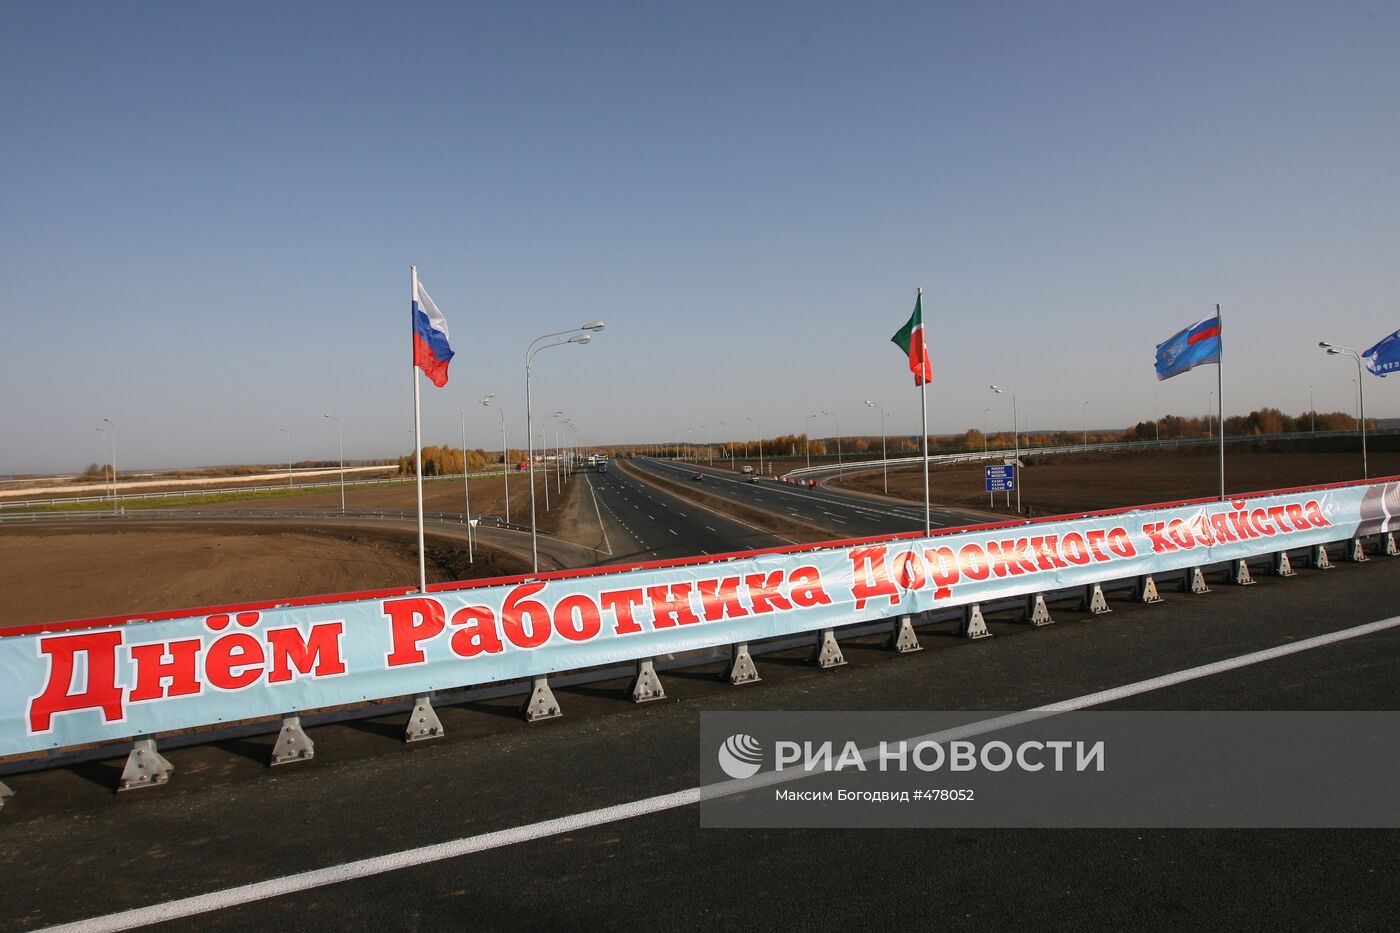 Открыта новая транспортная развязка на автотрассе М-7 "Волга"